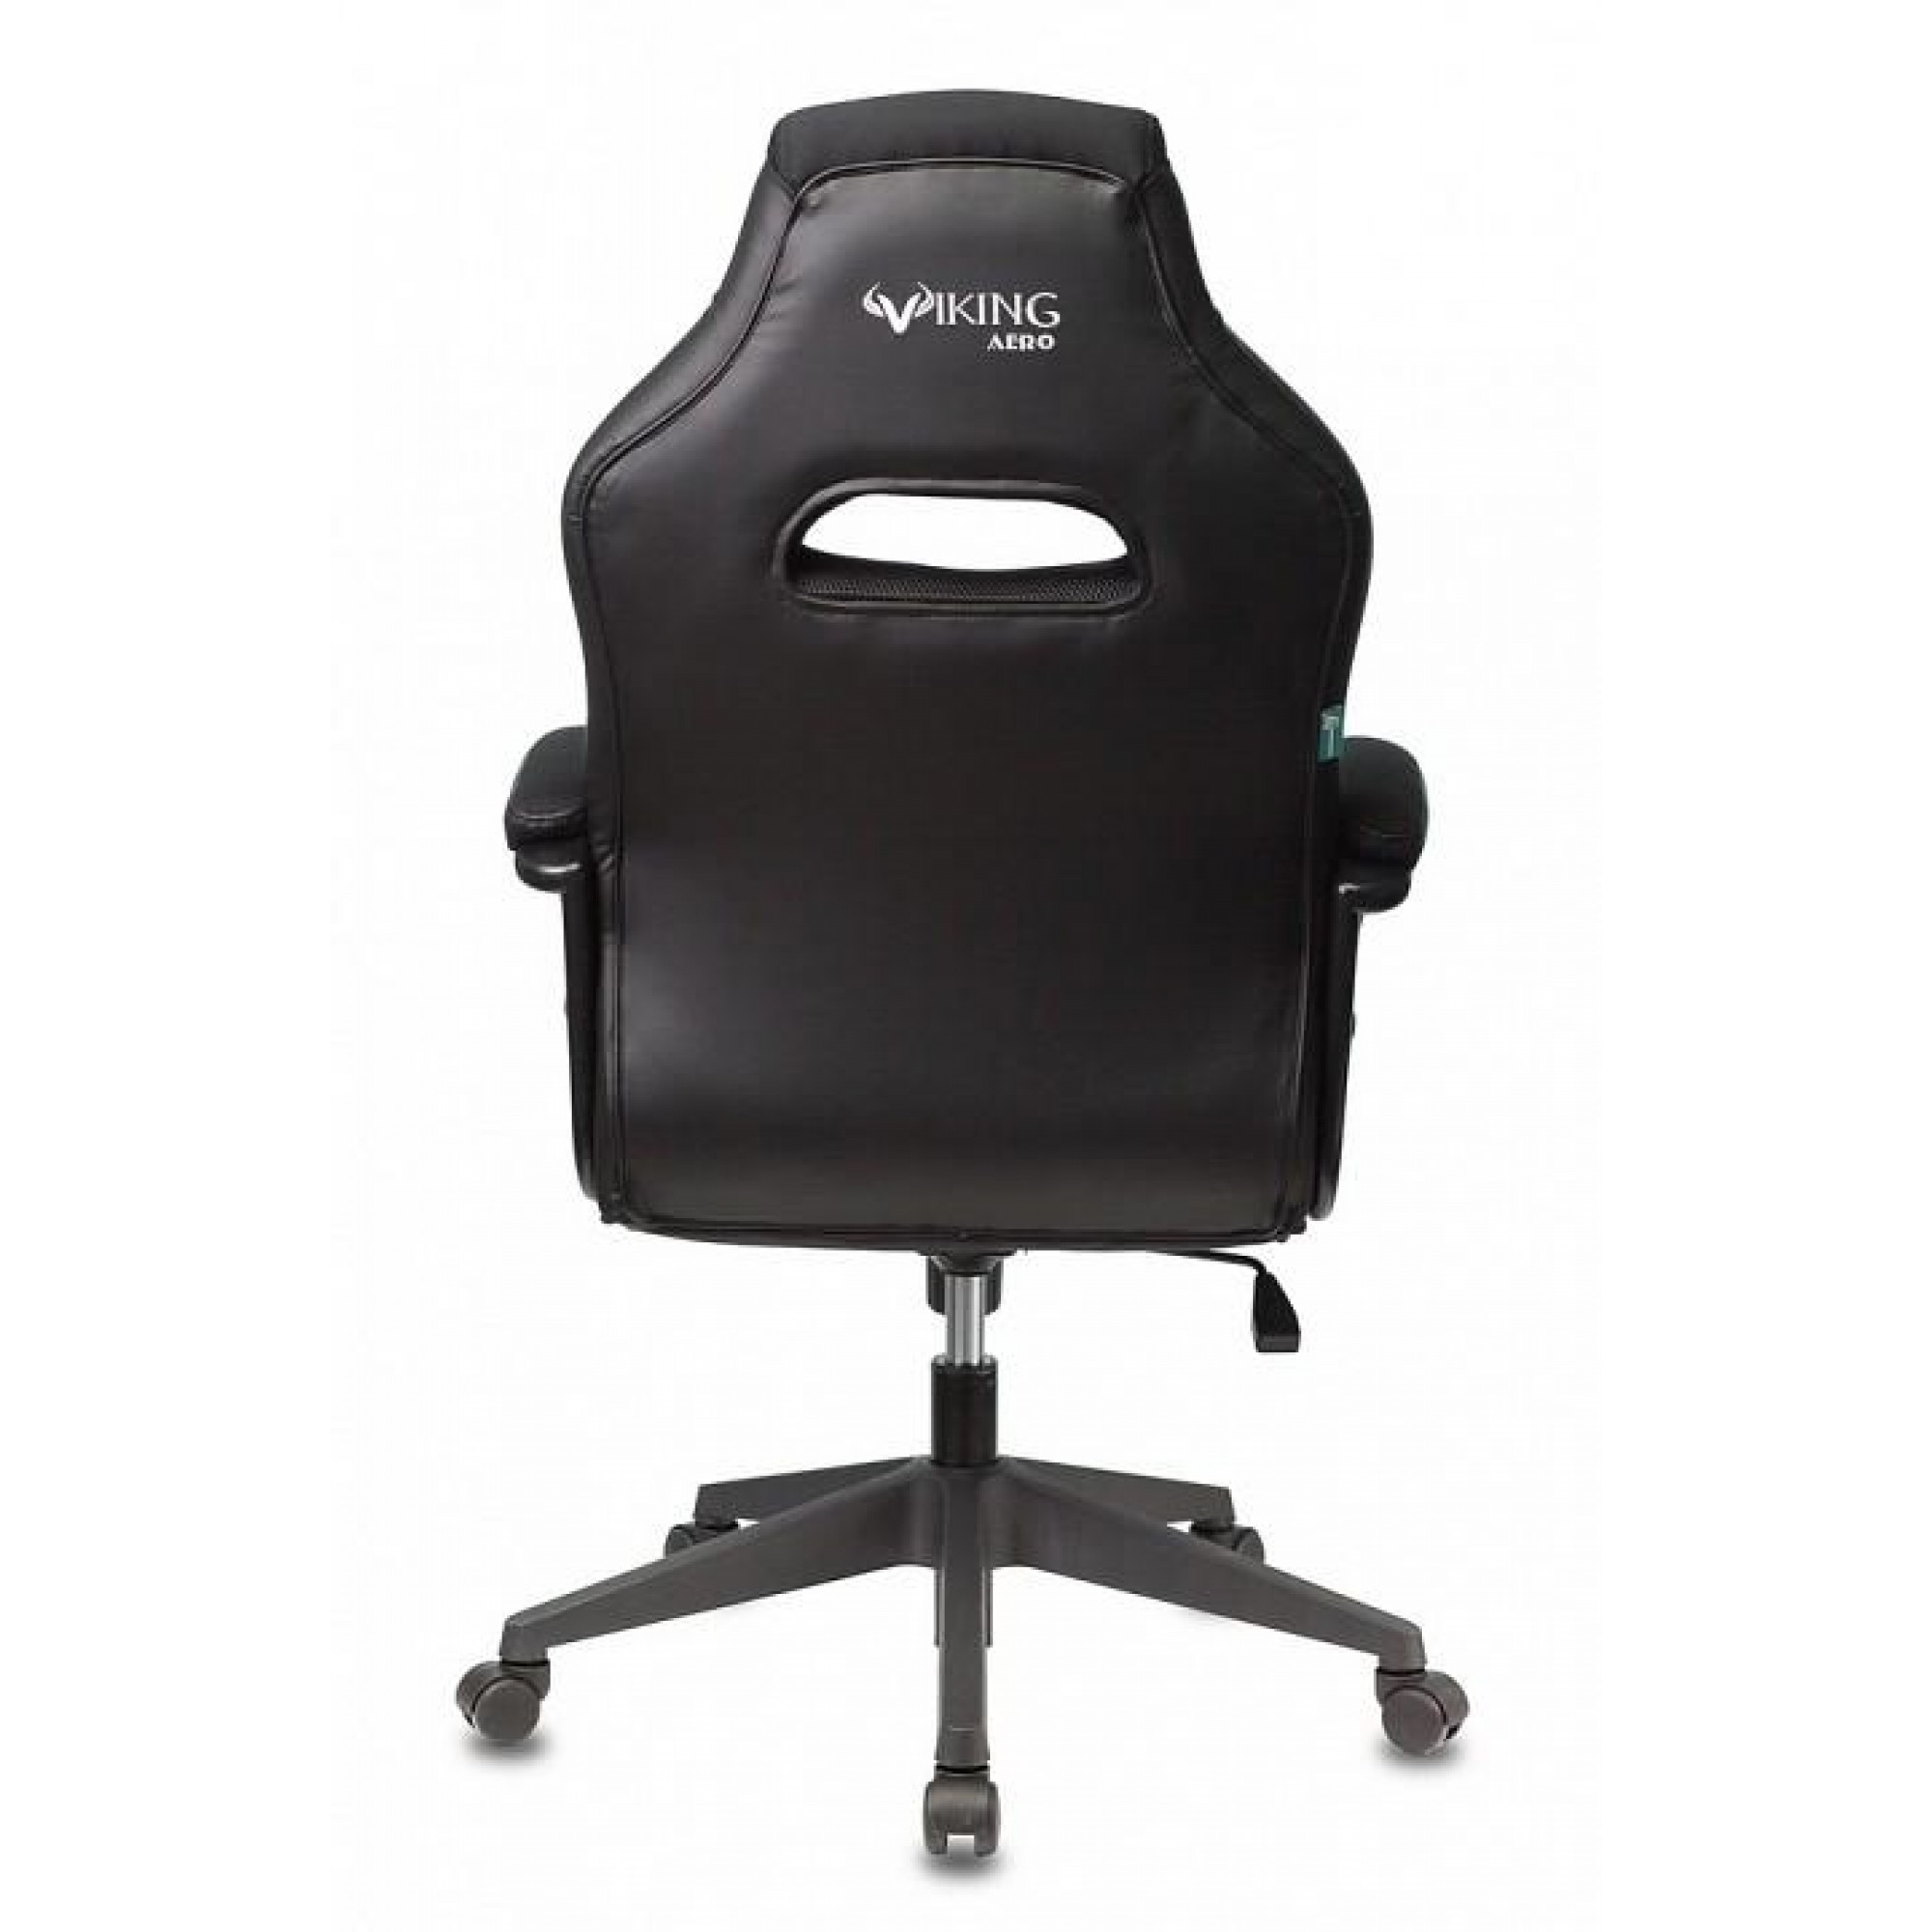 Кресло игровое Viking 3 AERO RED    BUR_1180820